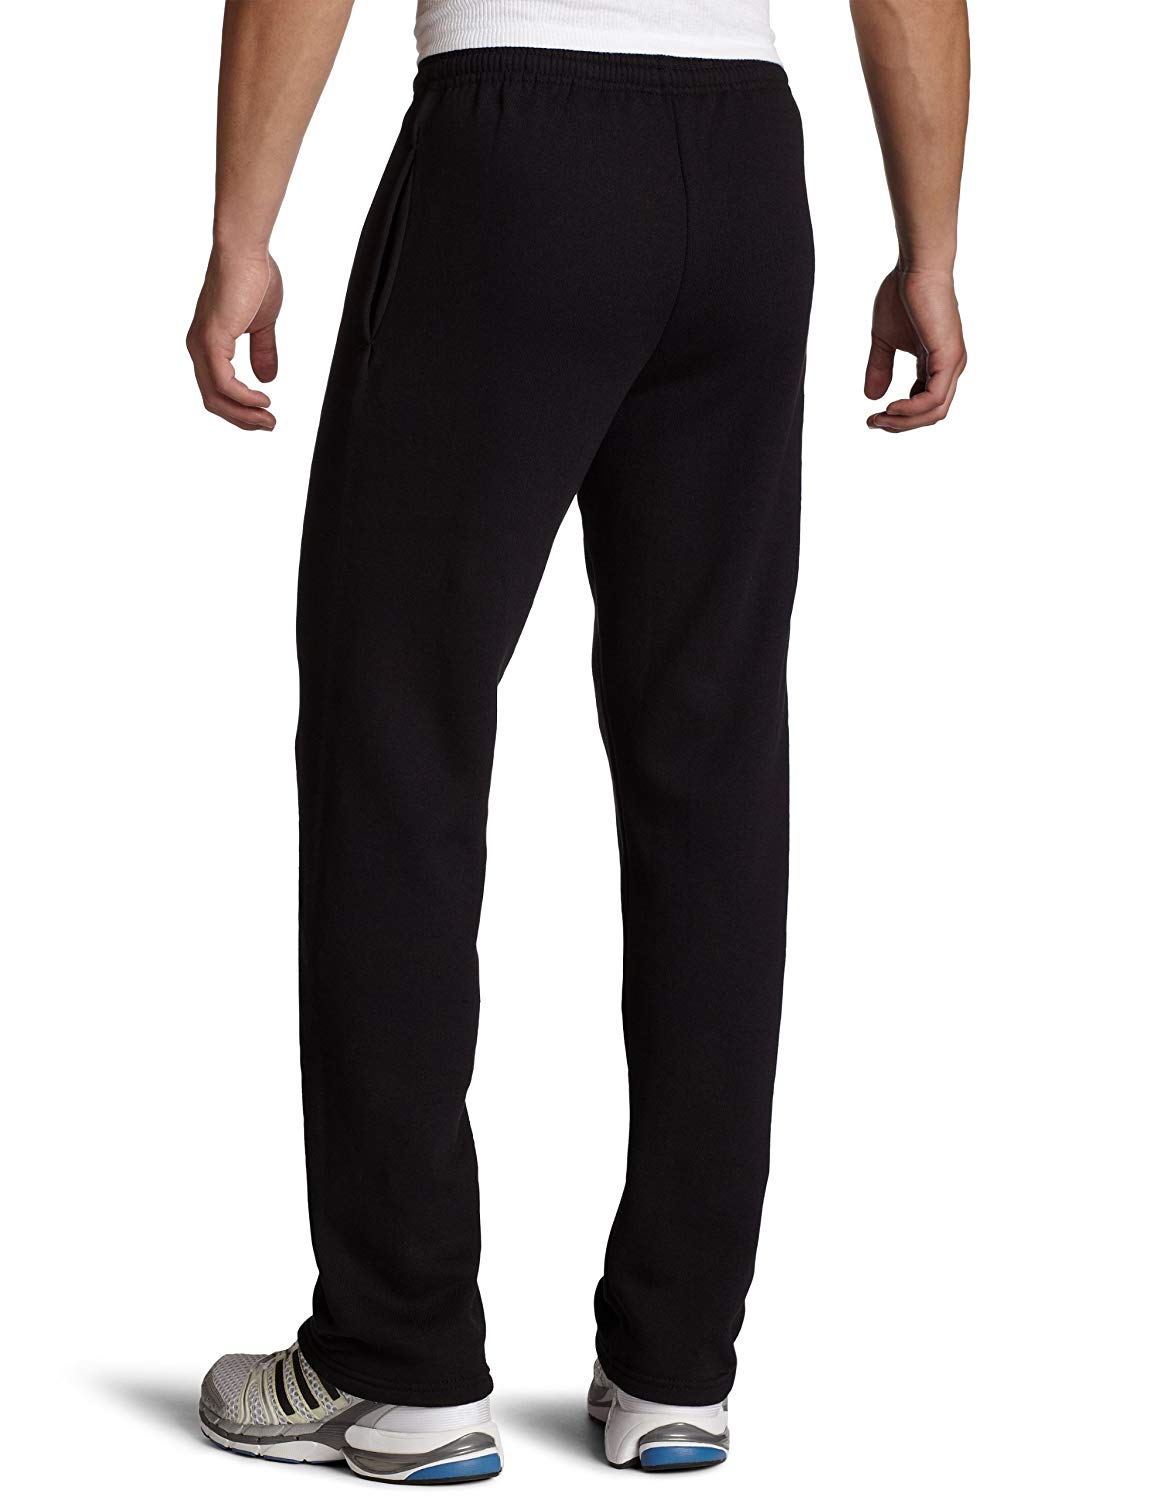 Russell Athletic Men's Dri-Power Open Bottom Sweatpants, Black, Size X ...